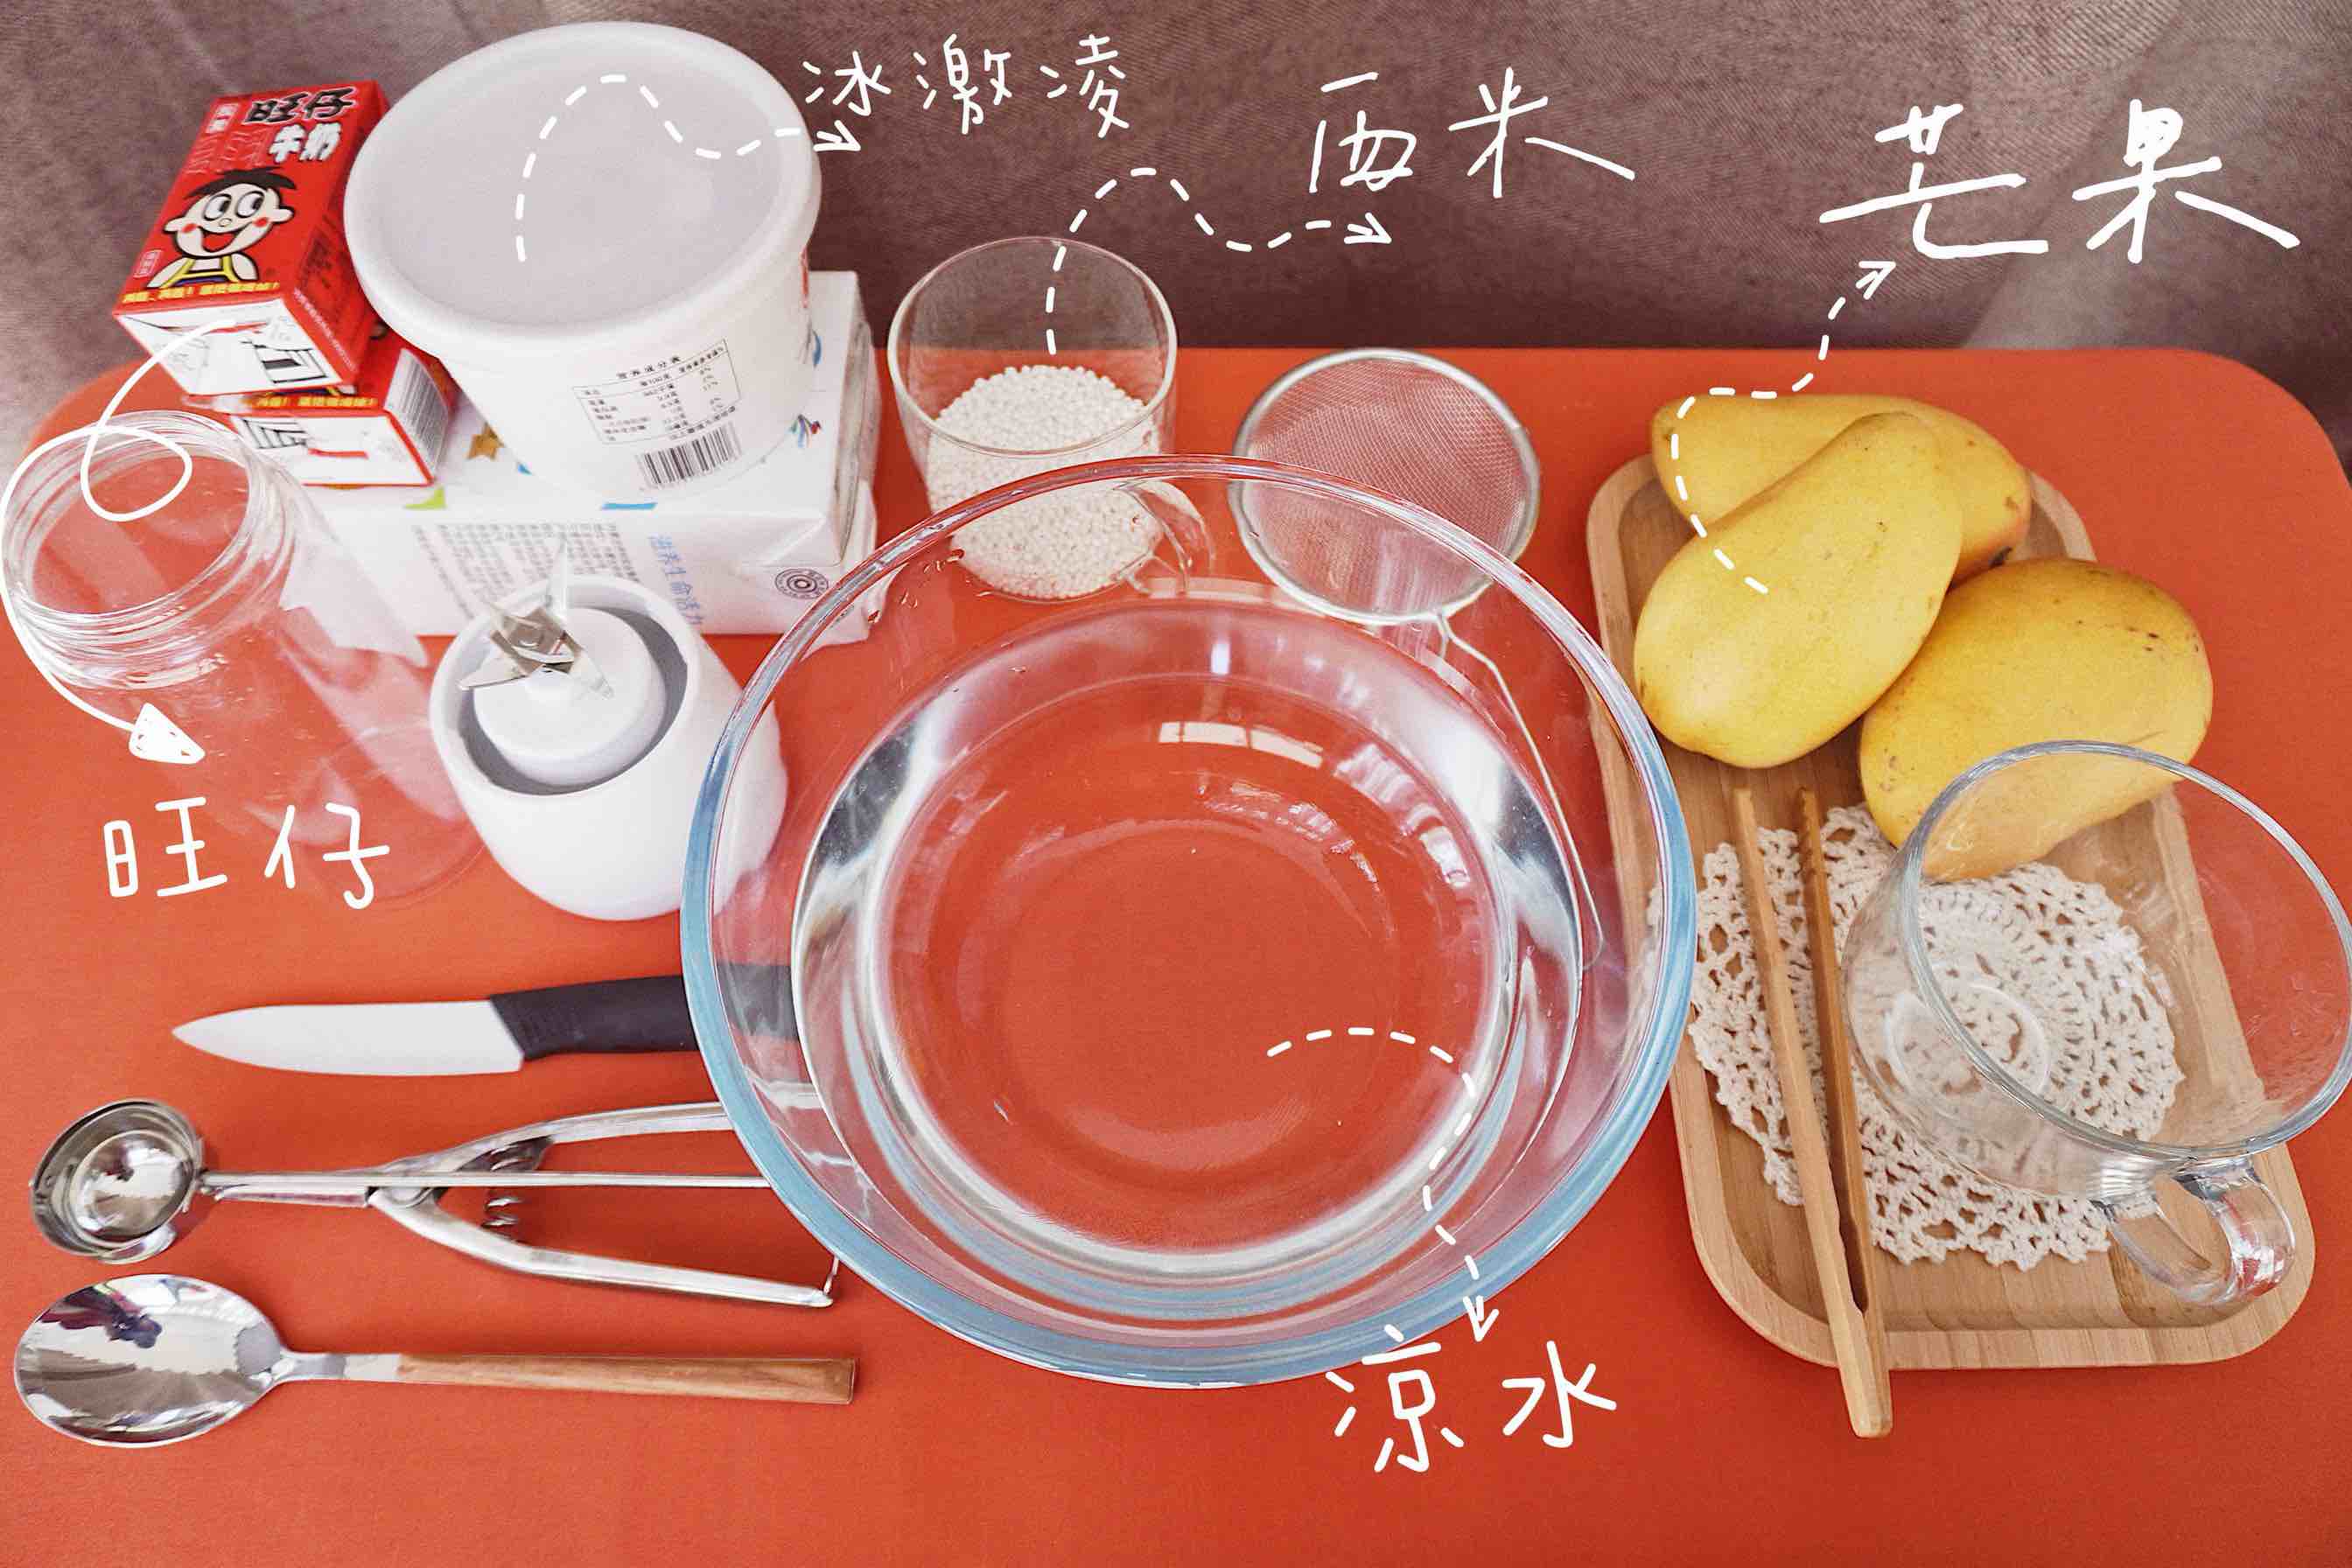 Ollie Huahua Food Diary "wang Tsai Mango Sago" recipe